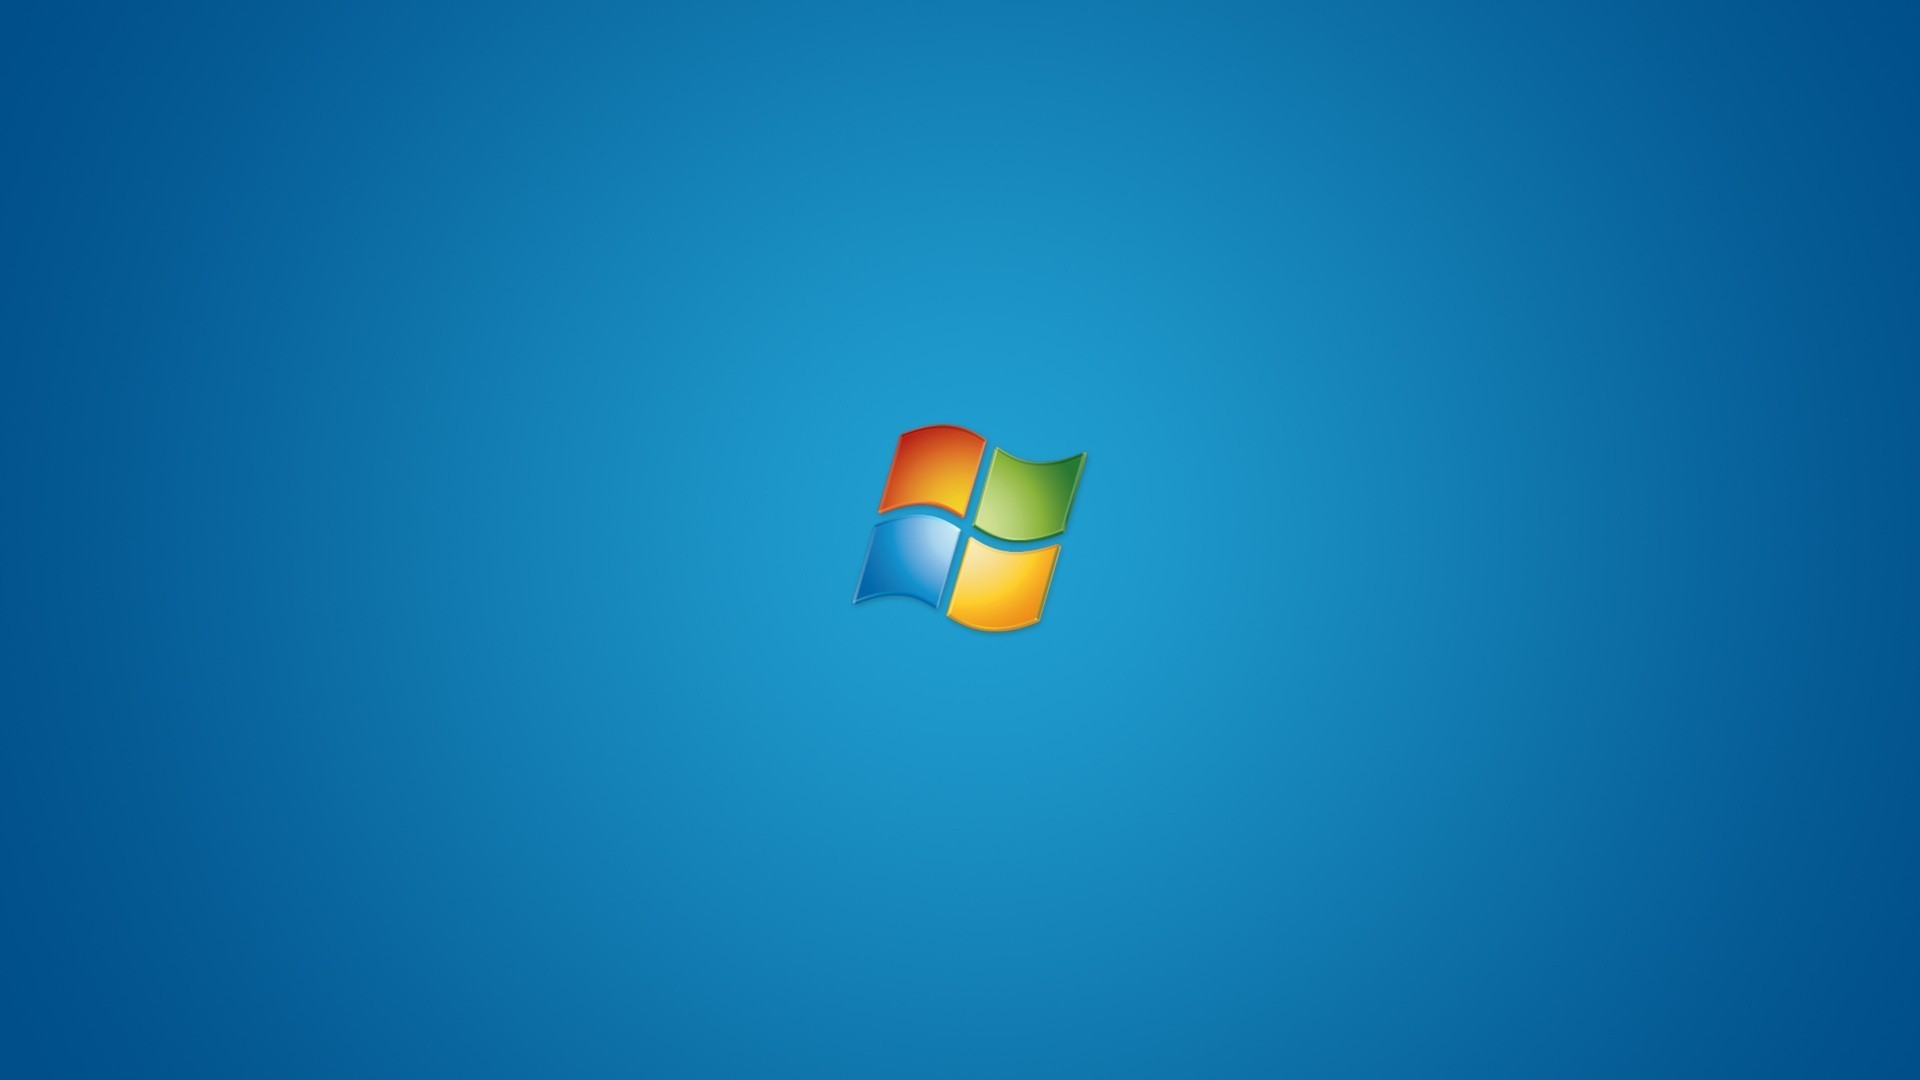 1920x1080 Windows XP error Microsoft Windows Blue Screen of Death wallpaper